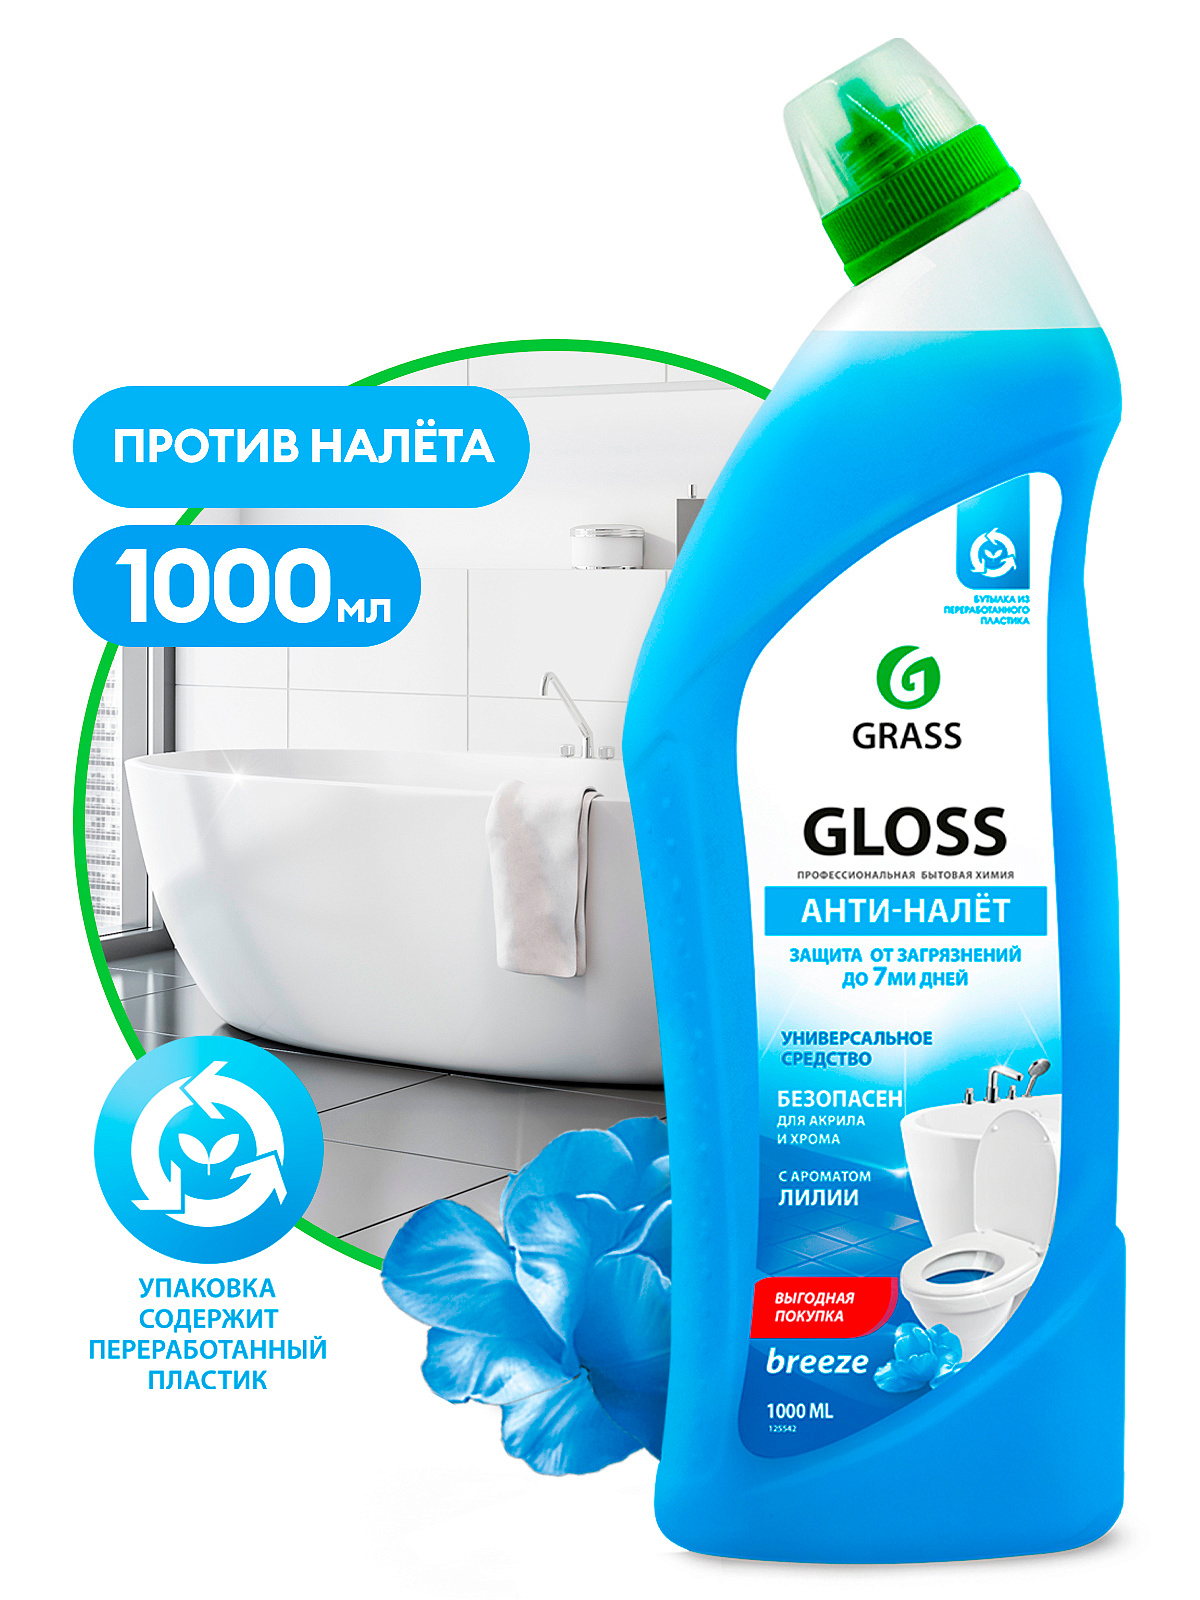 Чистящий гель для ванны и туалета "Gloss  breeze" (флакон 1000 мл)